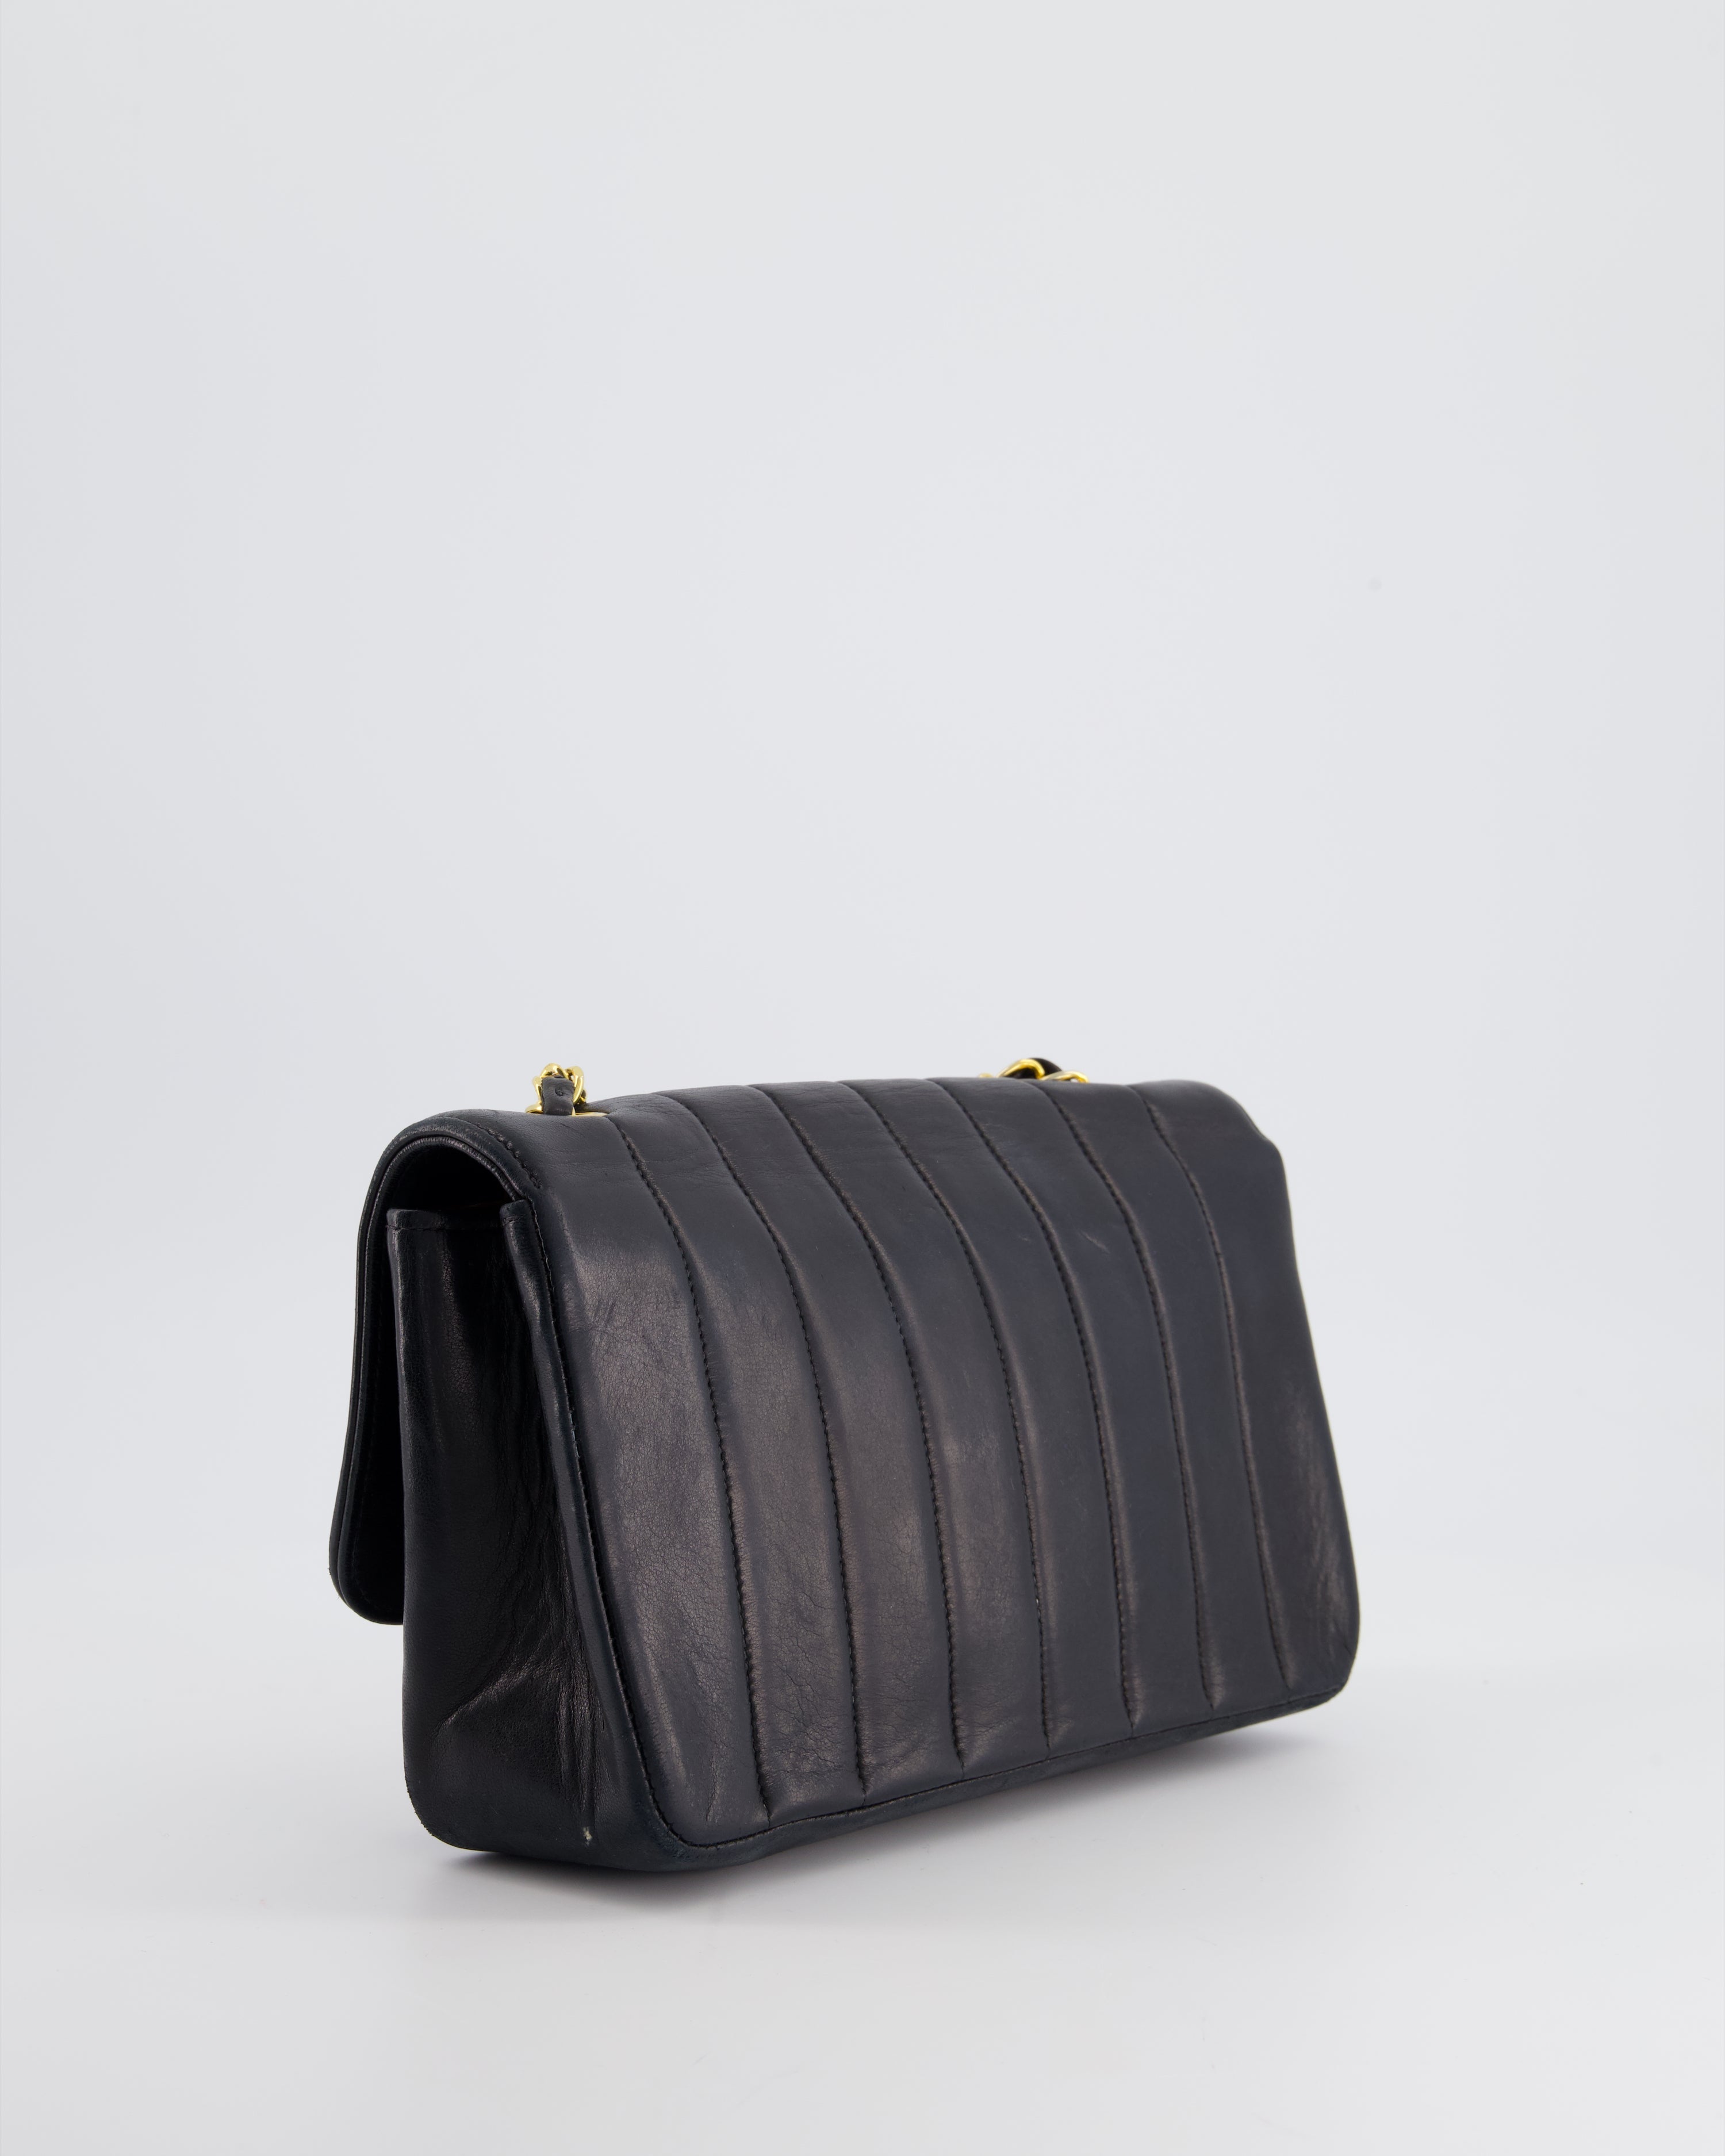 Chanel Navy Vintage Mademoiselle Medium Lambskin Single Flap Bag with 24K Gold Hardware